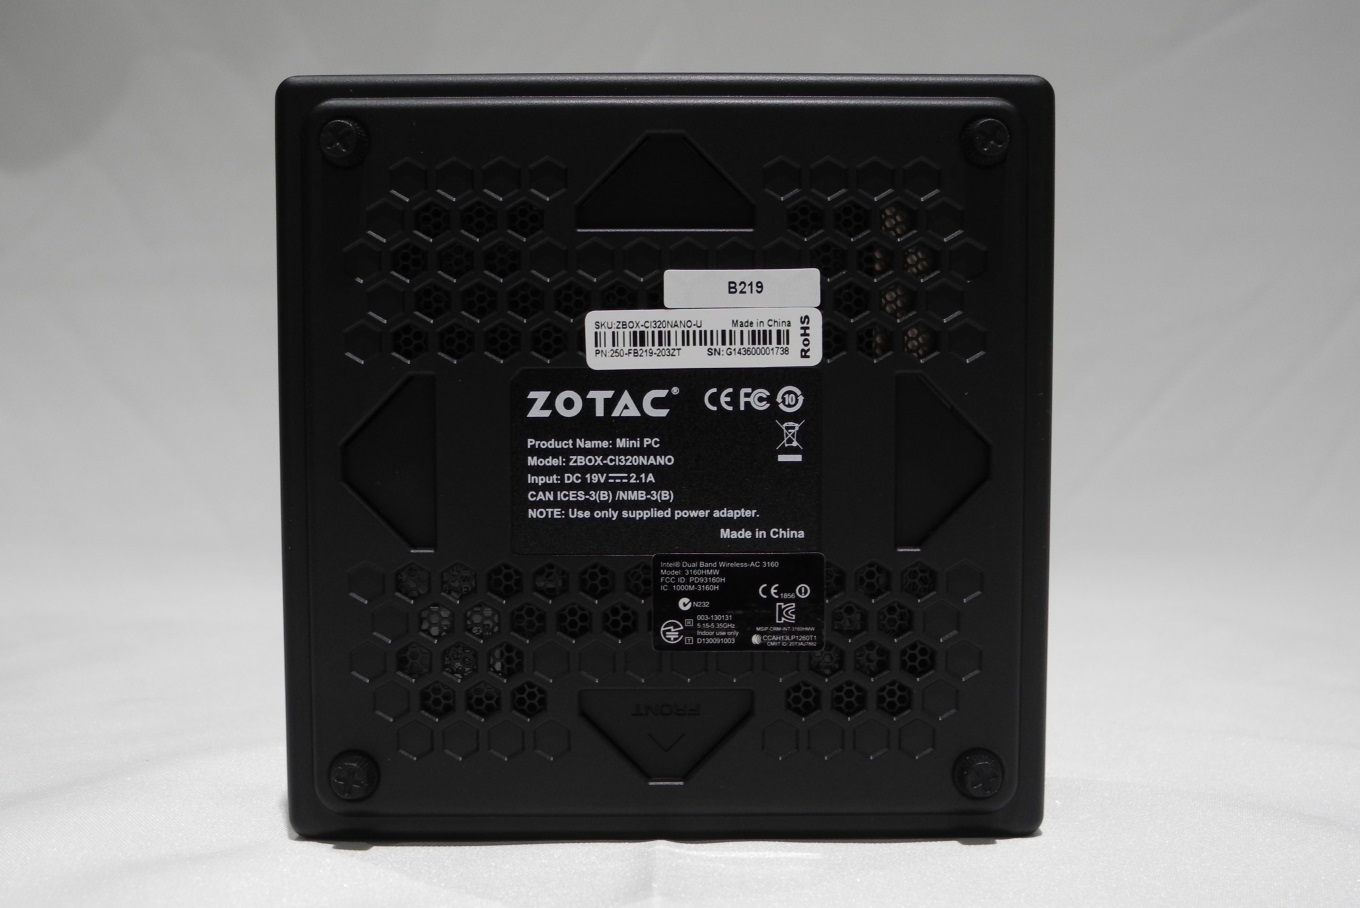 ZOTAC ZBOX $250 mini-PC teardown